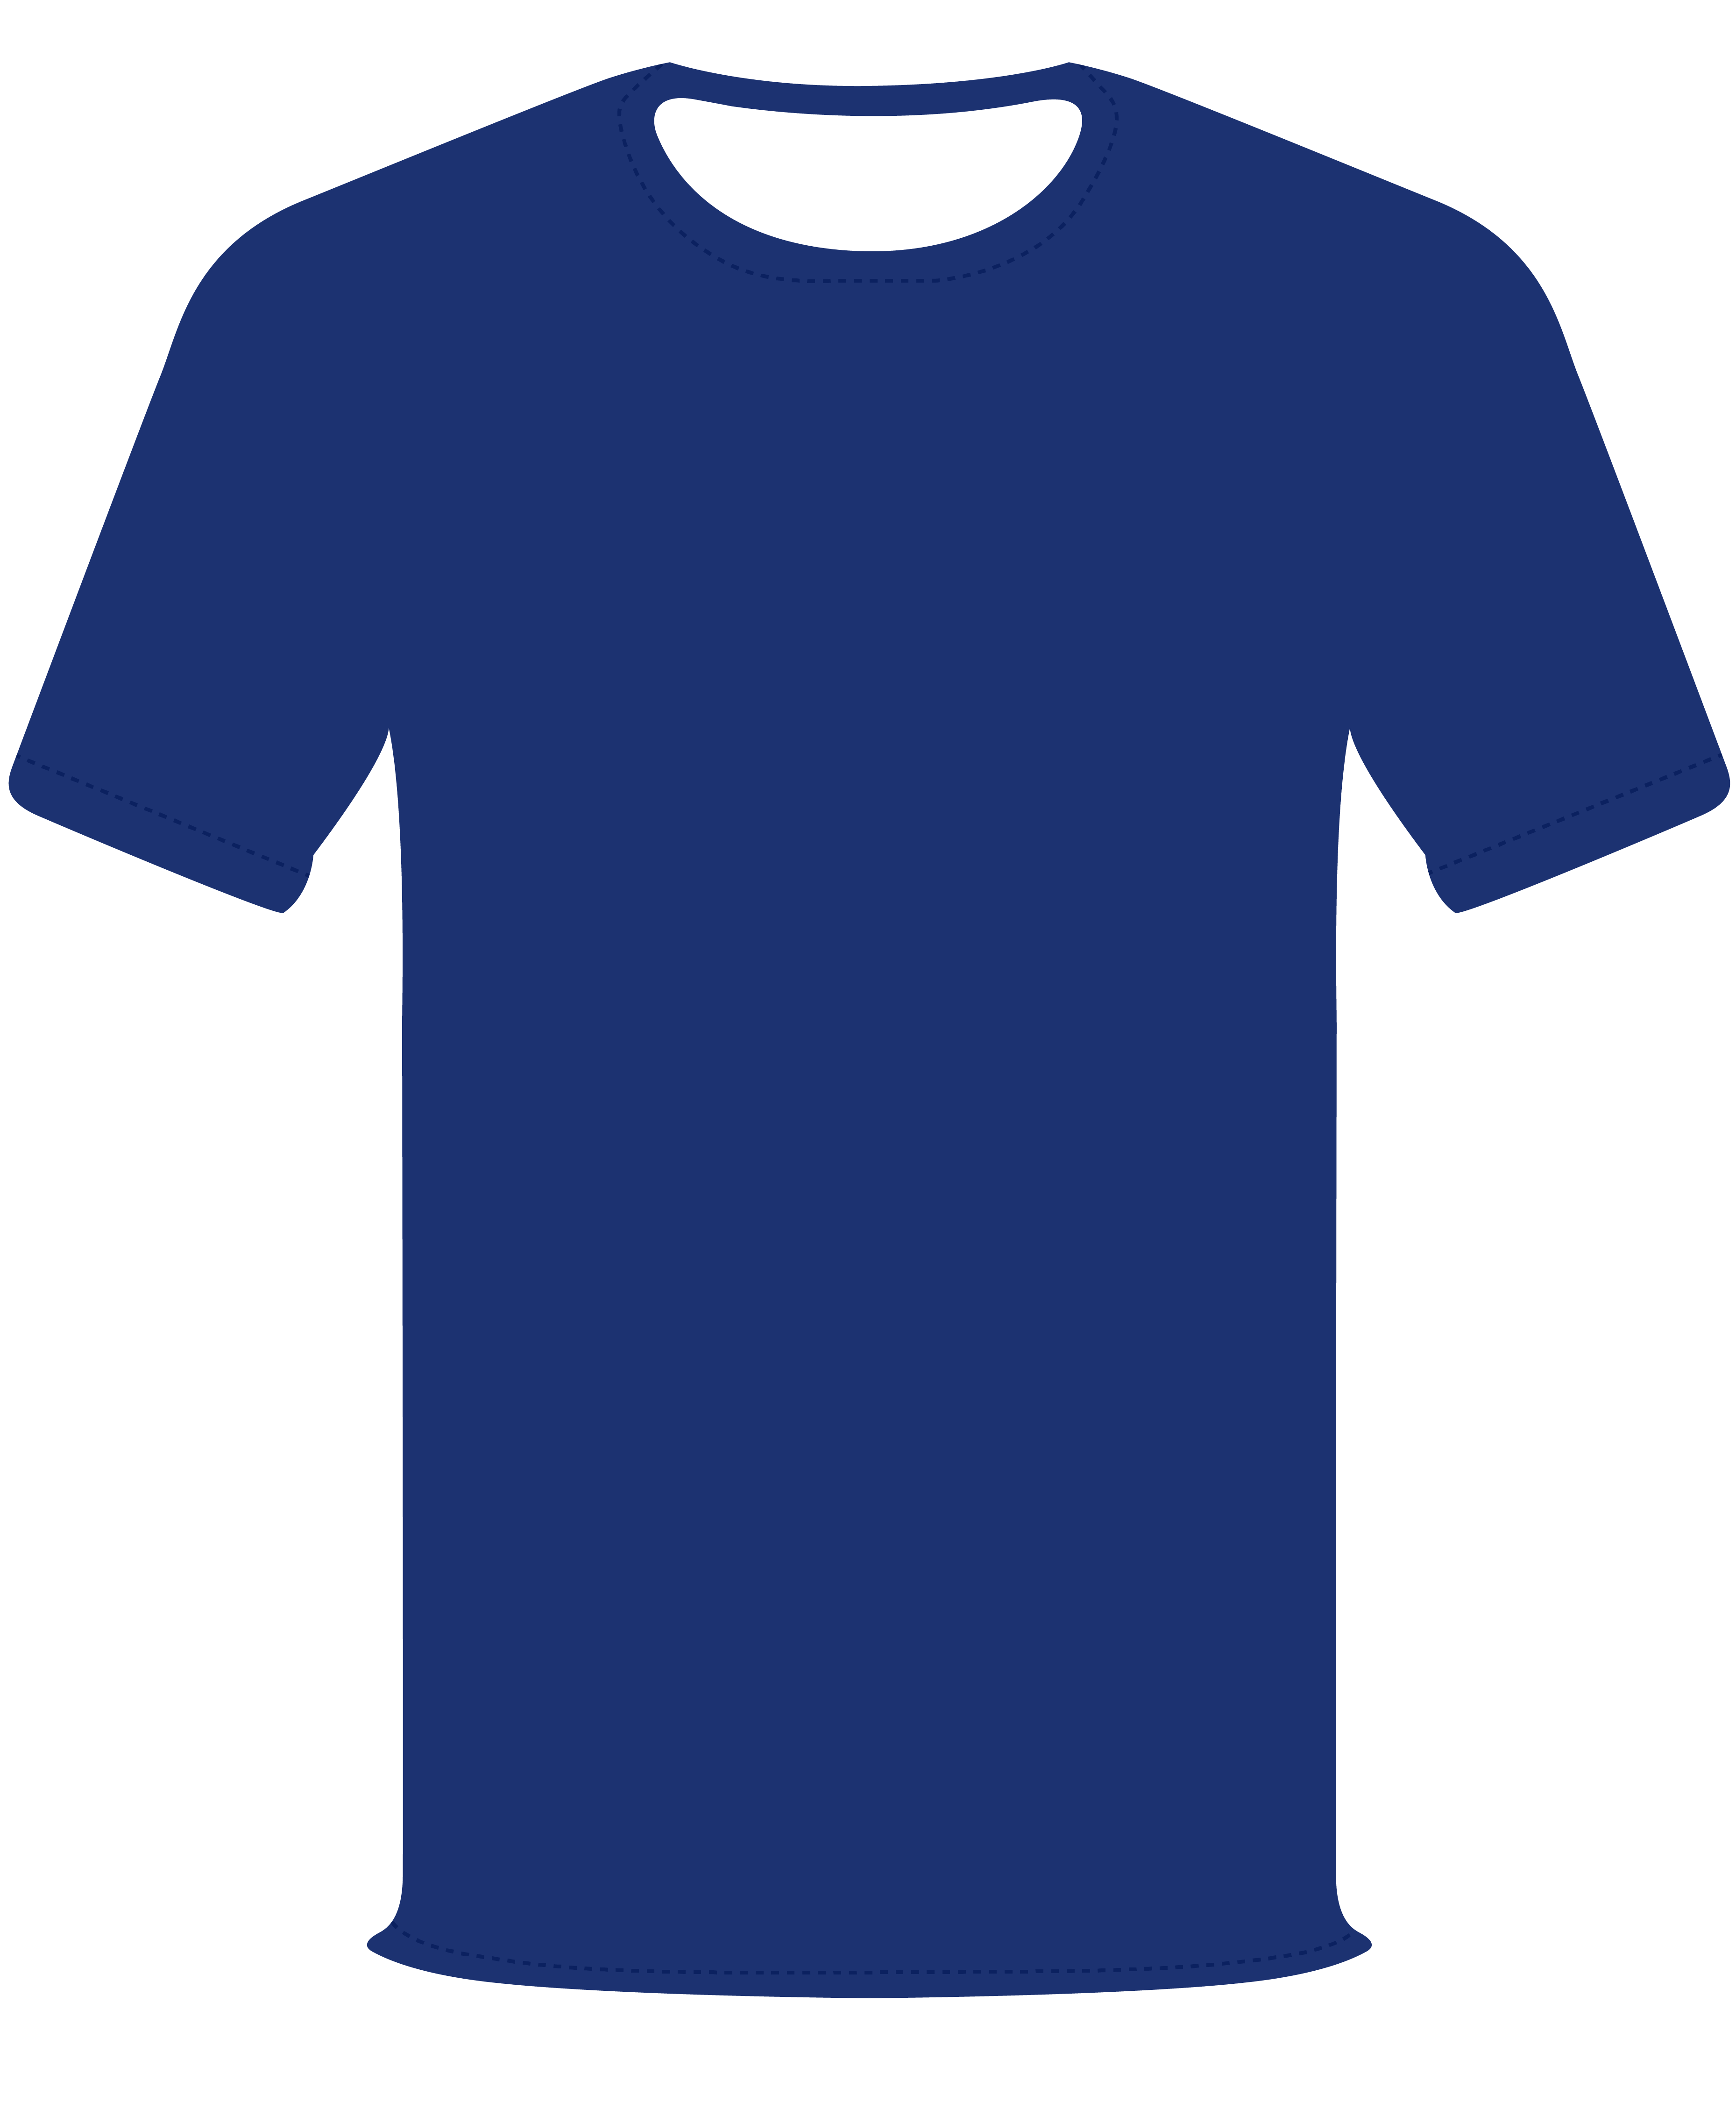 Men's T-Shirt - Adult